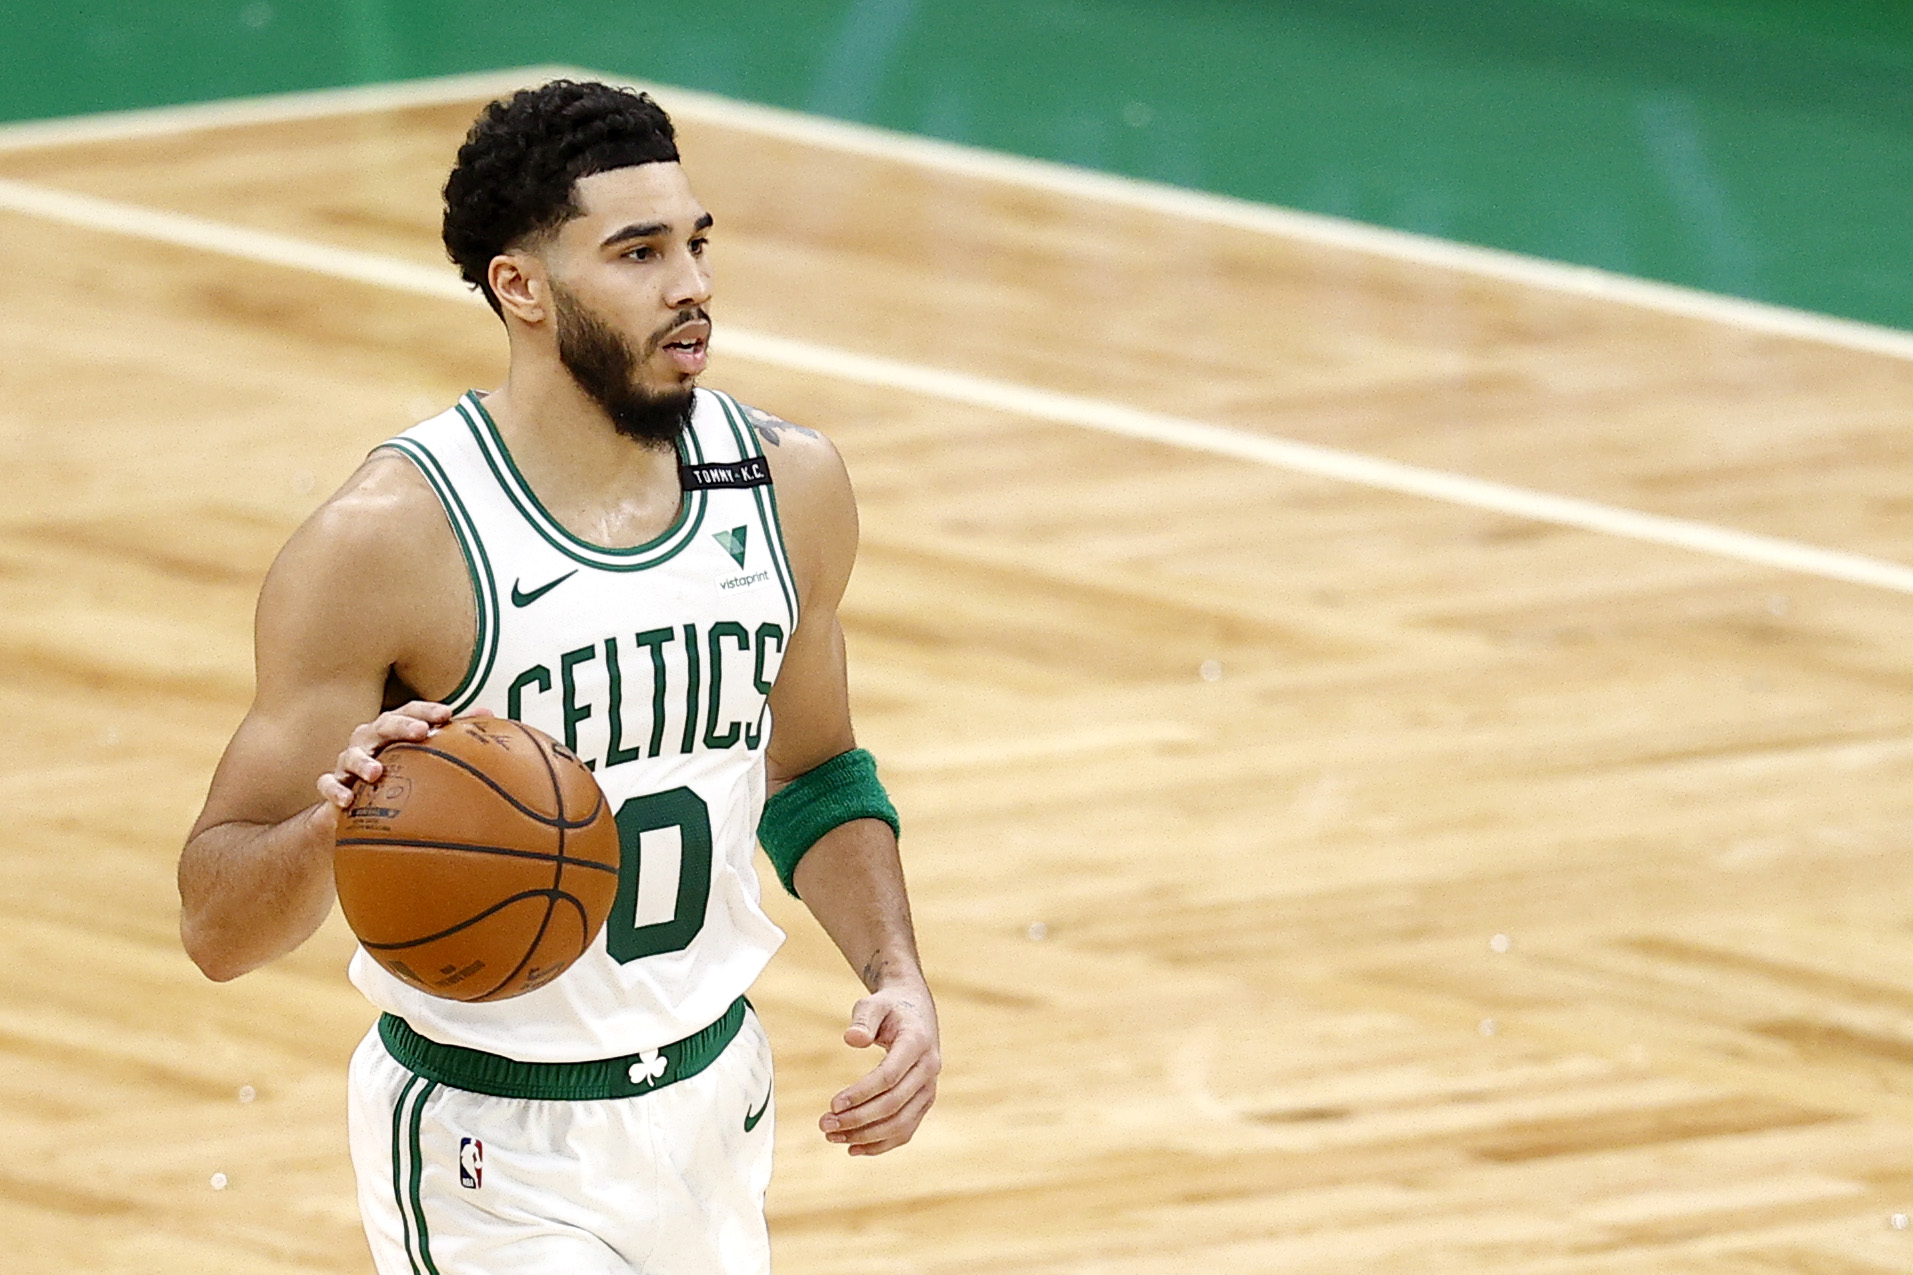 Does Jayson Tatum Have New Signature Celebration Amid Celtics' Surge?